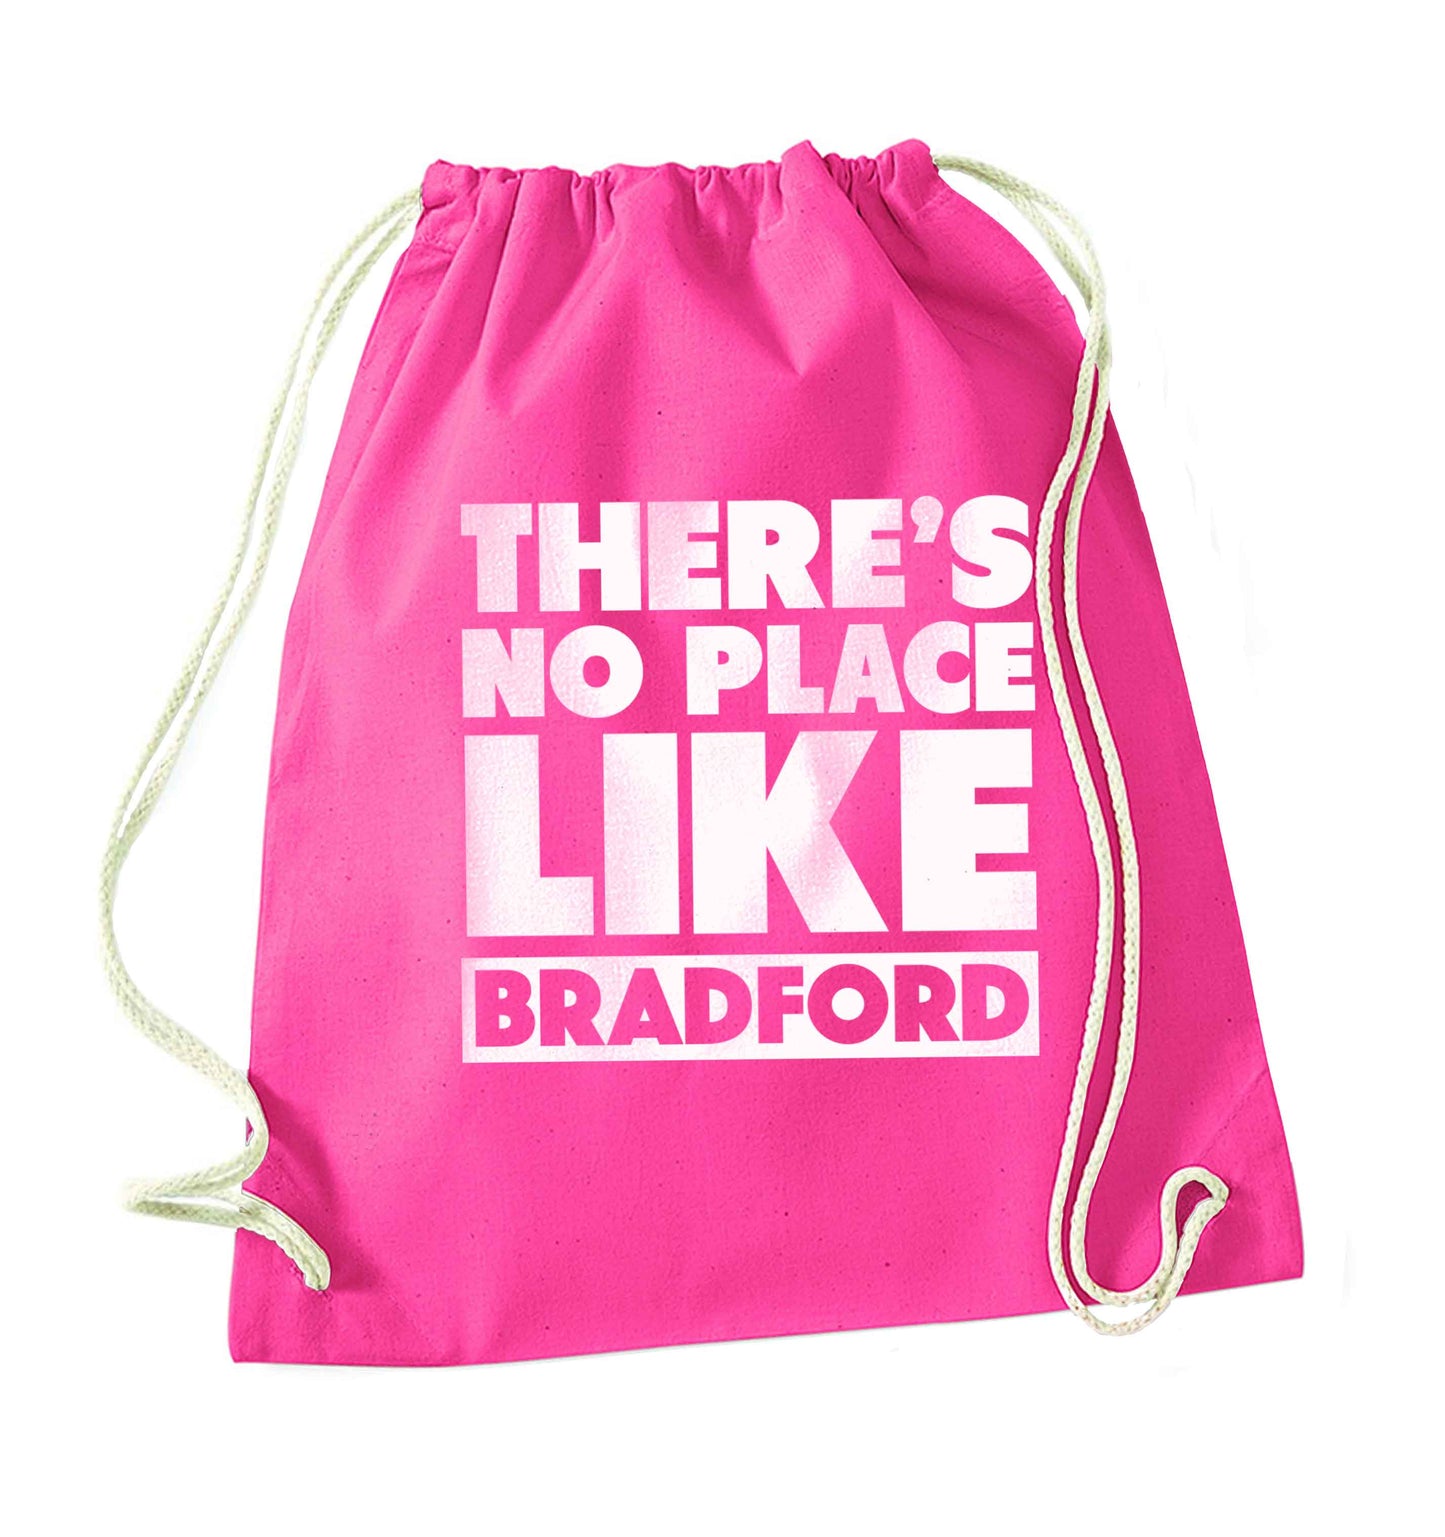 There's no place like Bradford pink drawstring bag